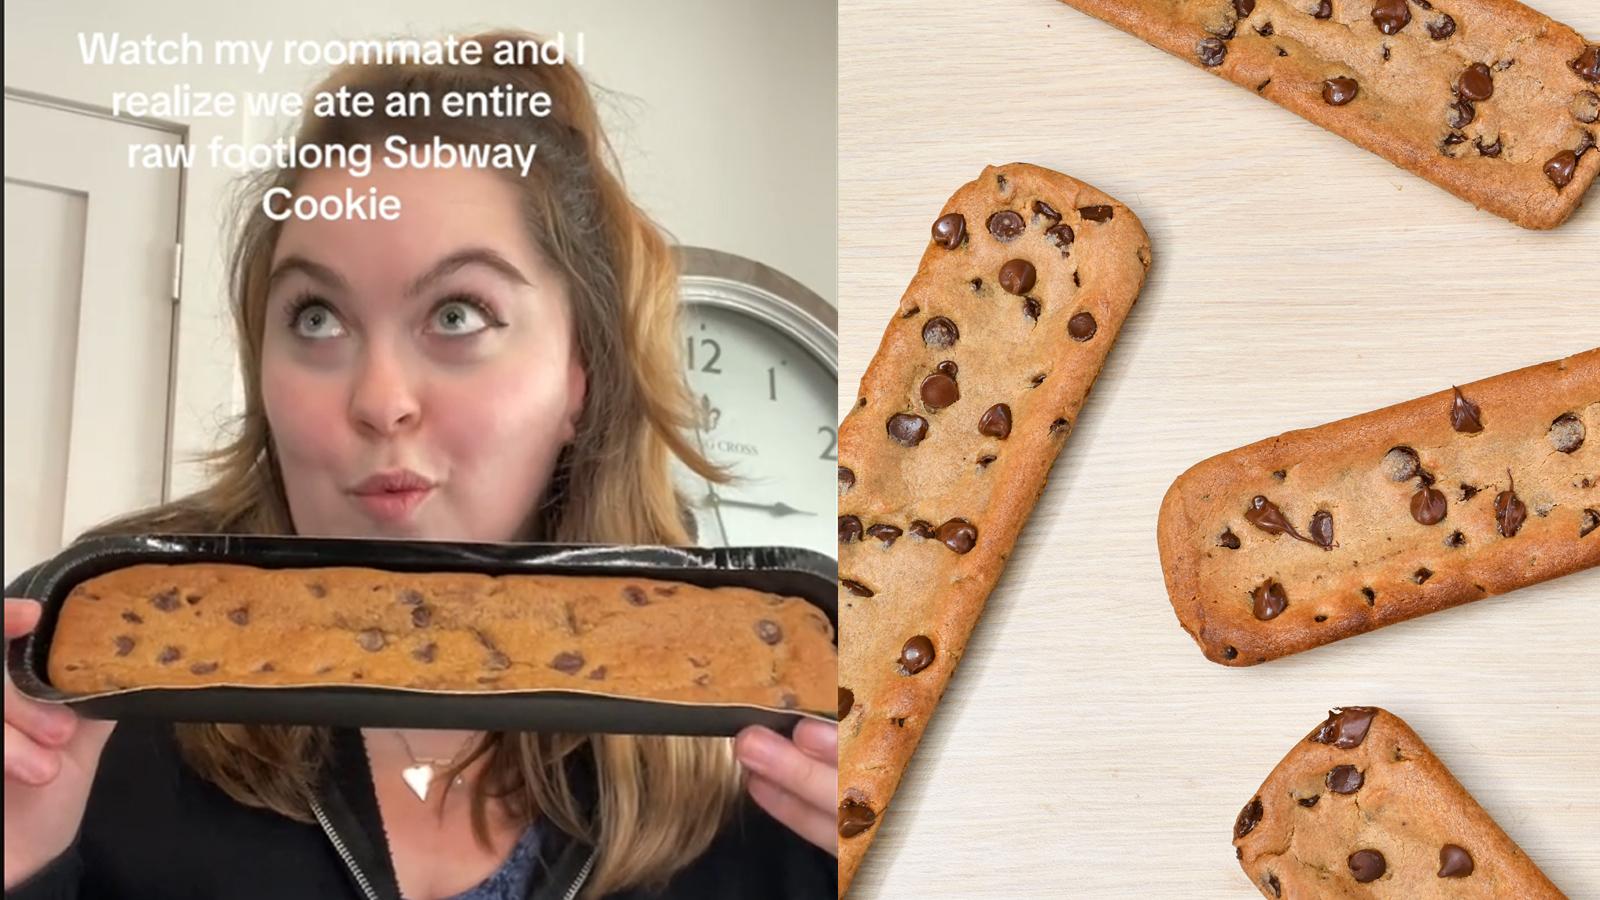 The TikTok user @jcmillmill alongside a Subway Footlong cookie